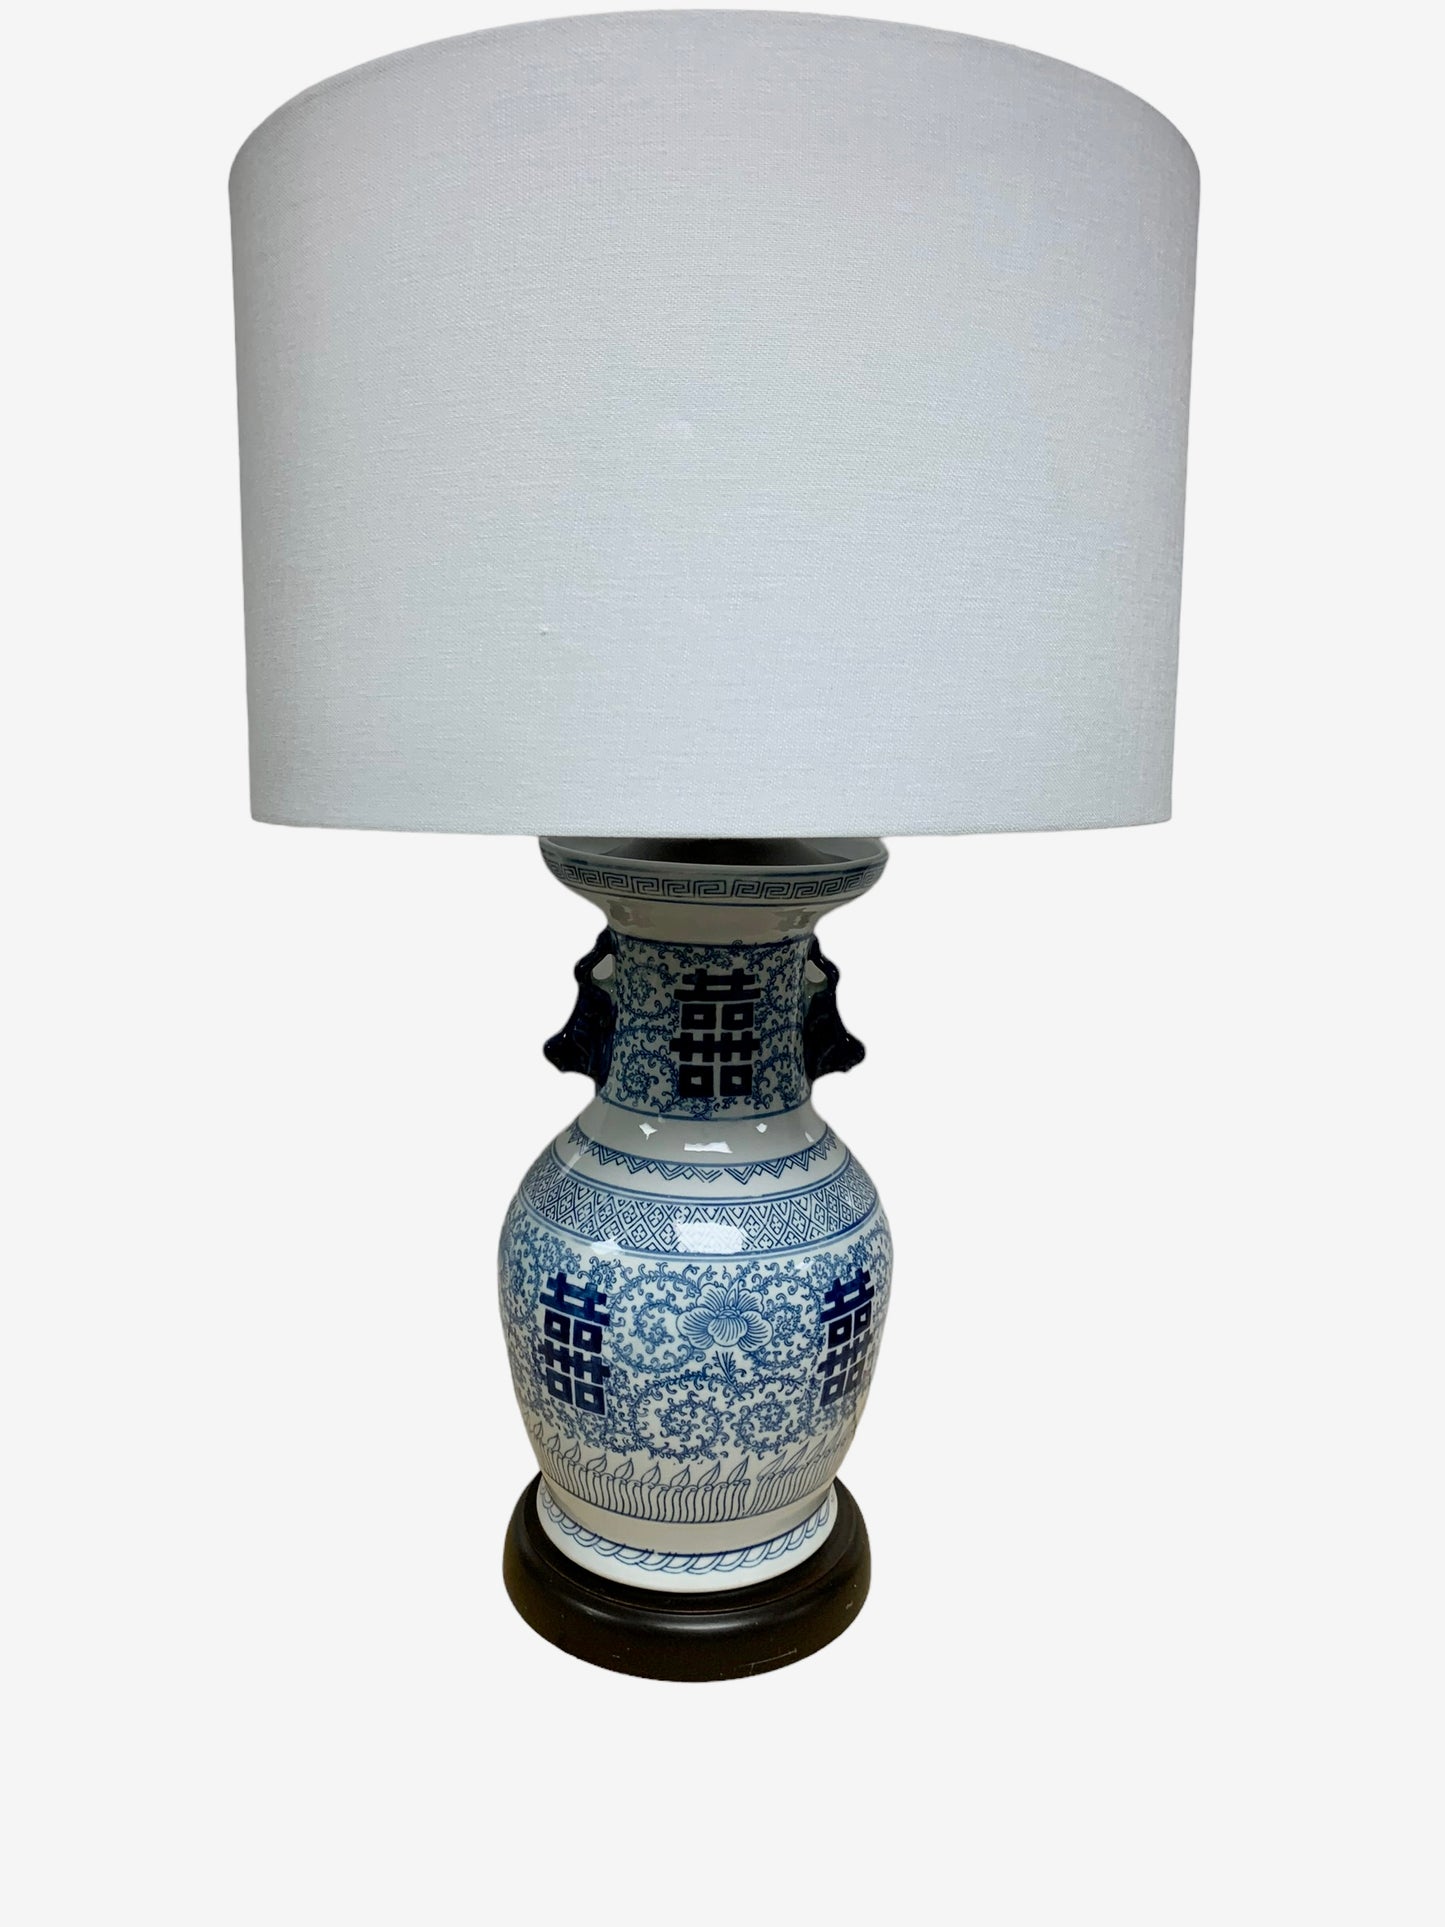 Lighting Vintage Estate Chinese Chinoiserie Design Table Lamp Blue on White Porcelain